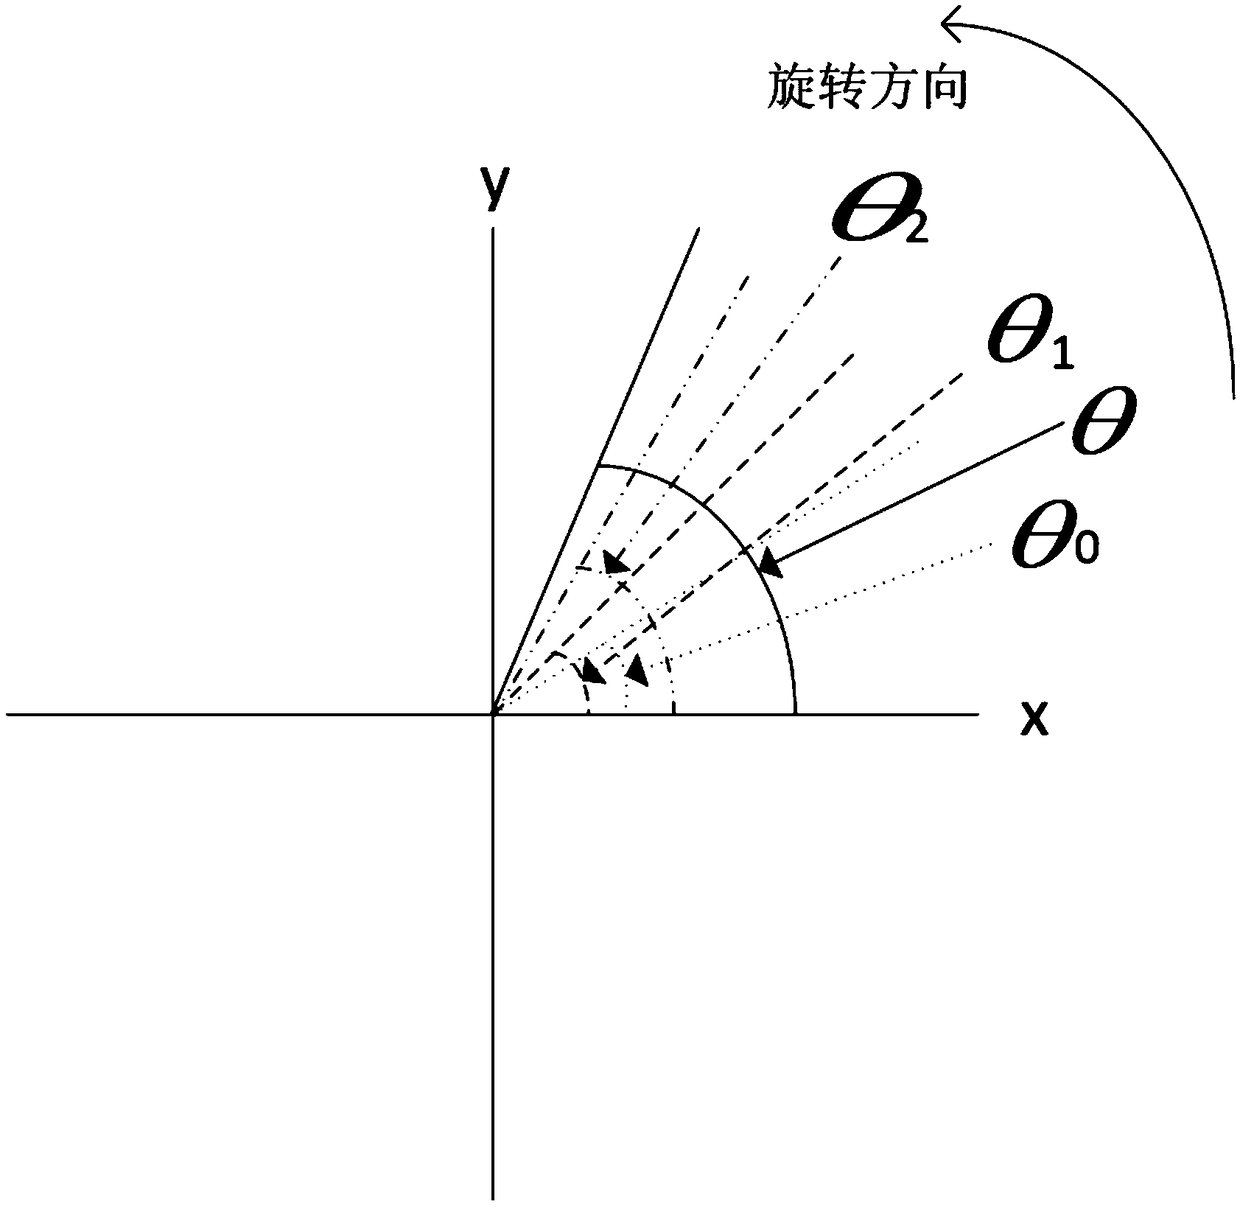 Forward interpolation method for angle sensor and rotary encoder